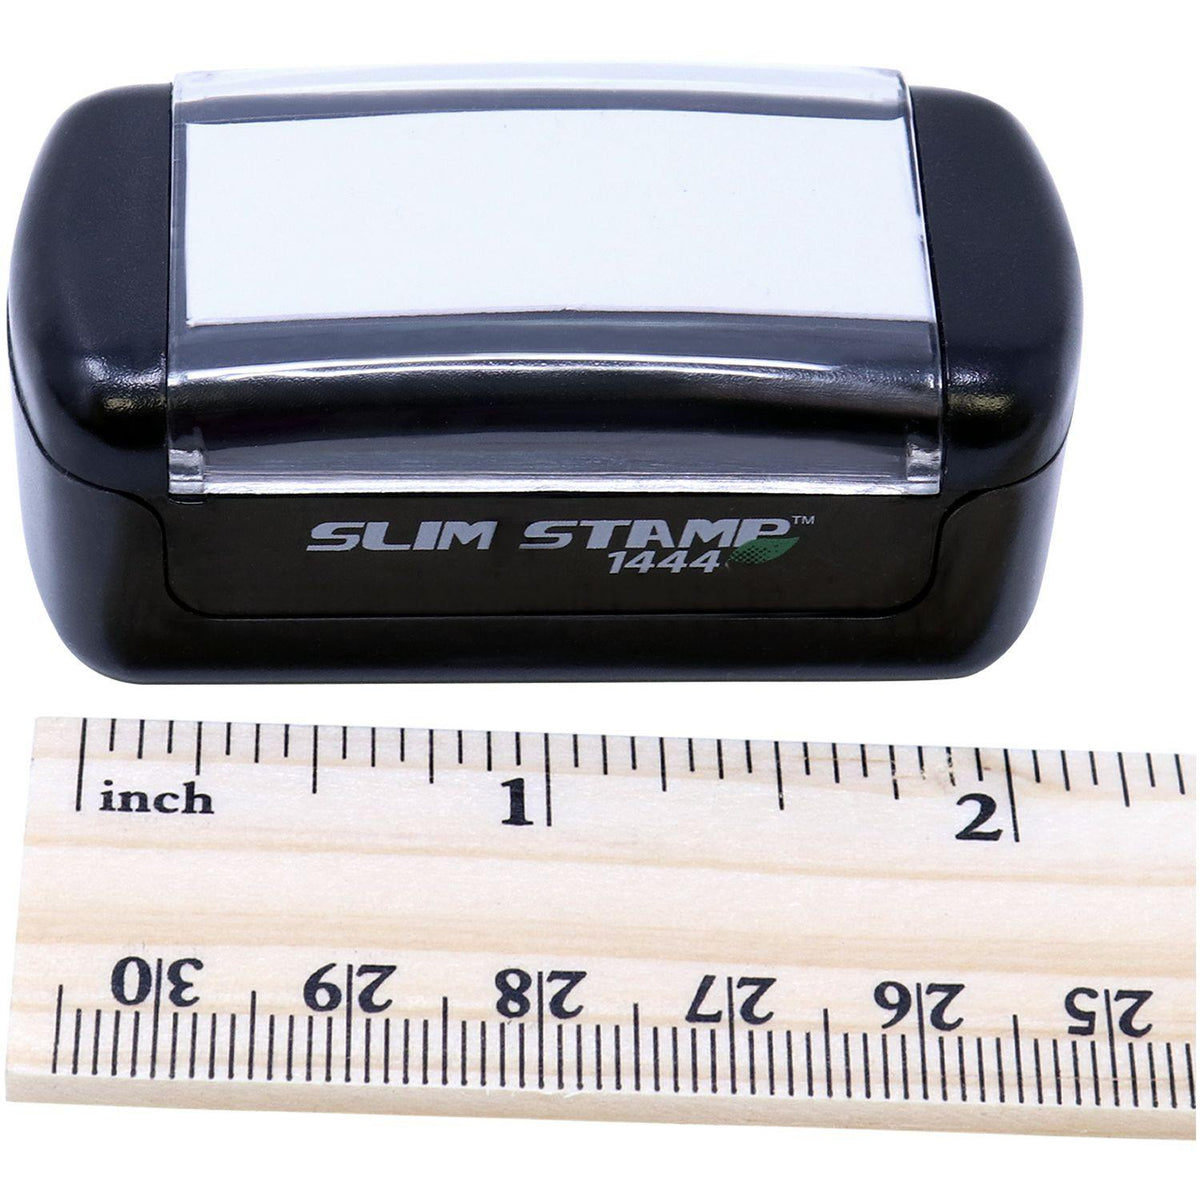 Measurement Slim Pre-Inked Despachado Stamp with Ruler